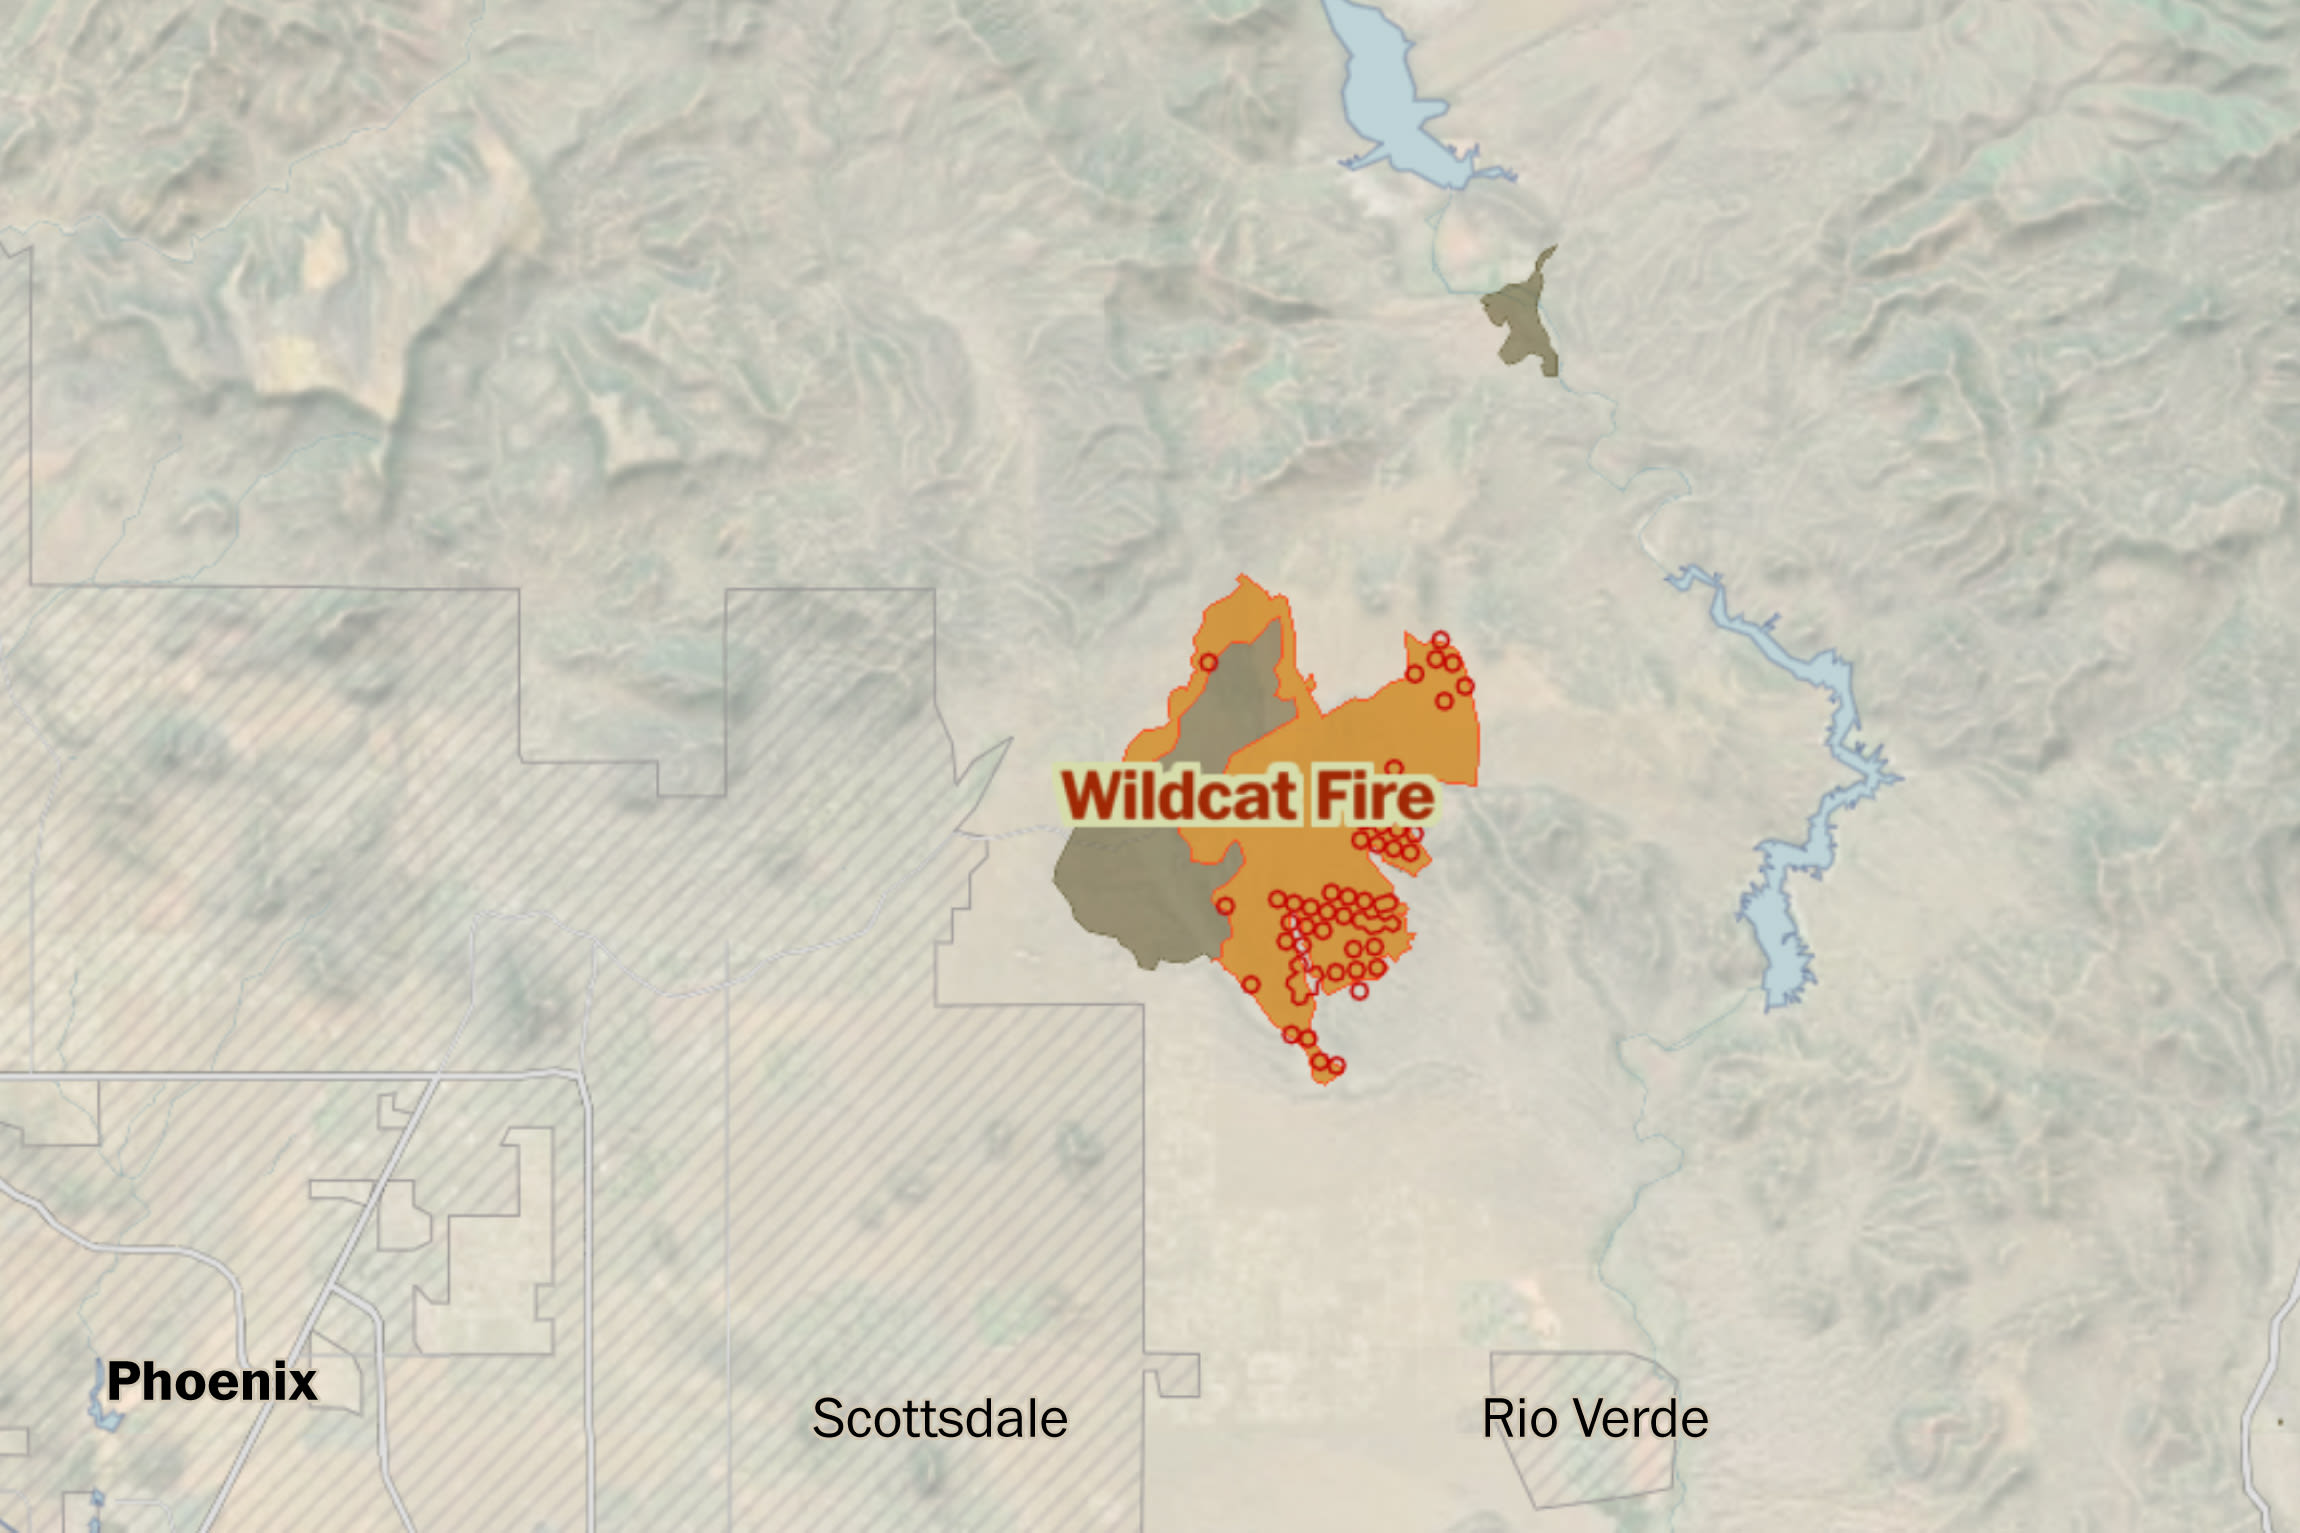 Maps of the Wildcat Fire in Arizona